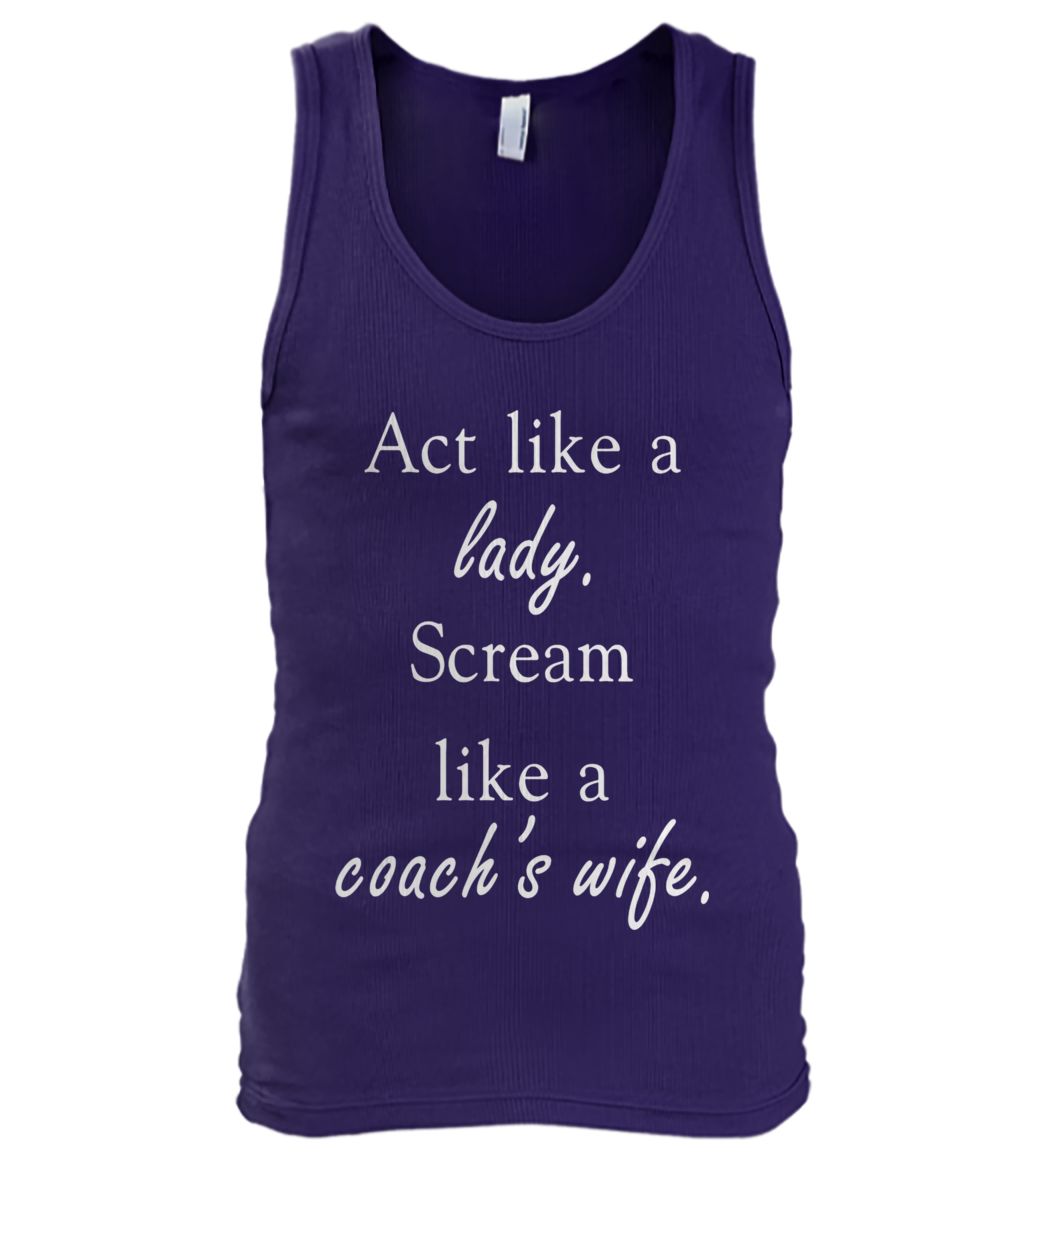 Act like a lady scream like a coach's wife men's tank top